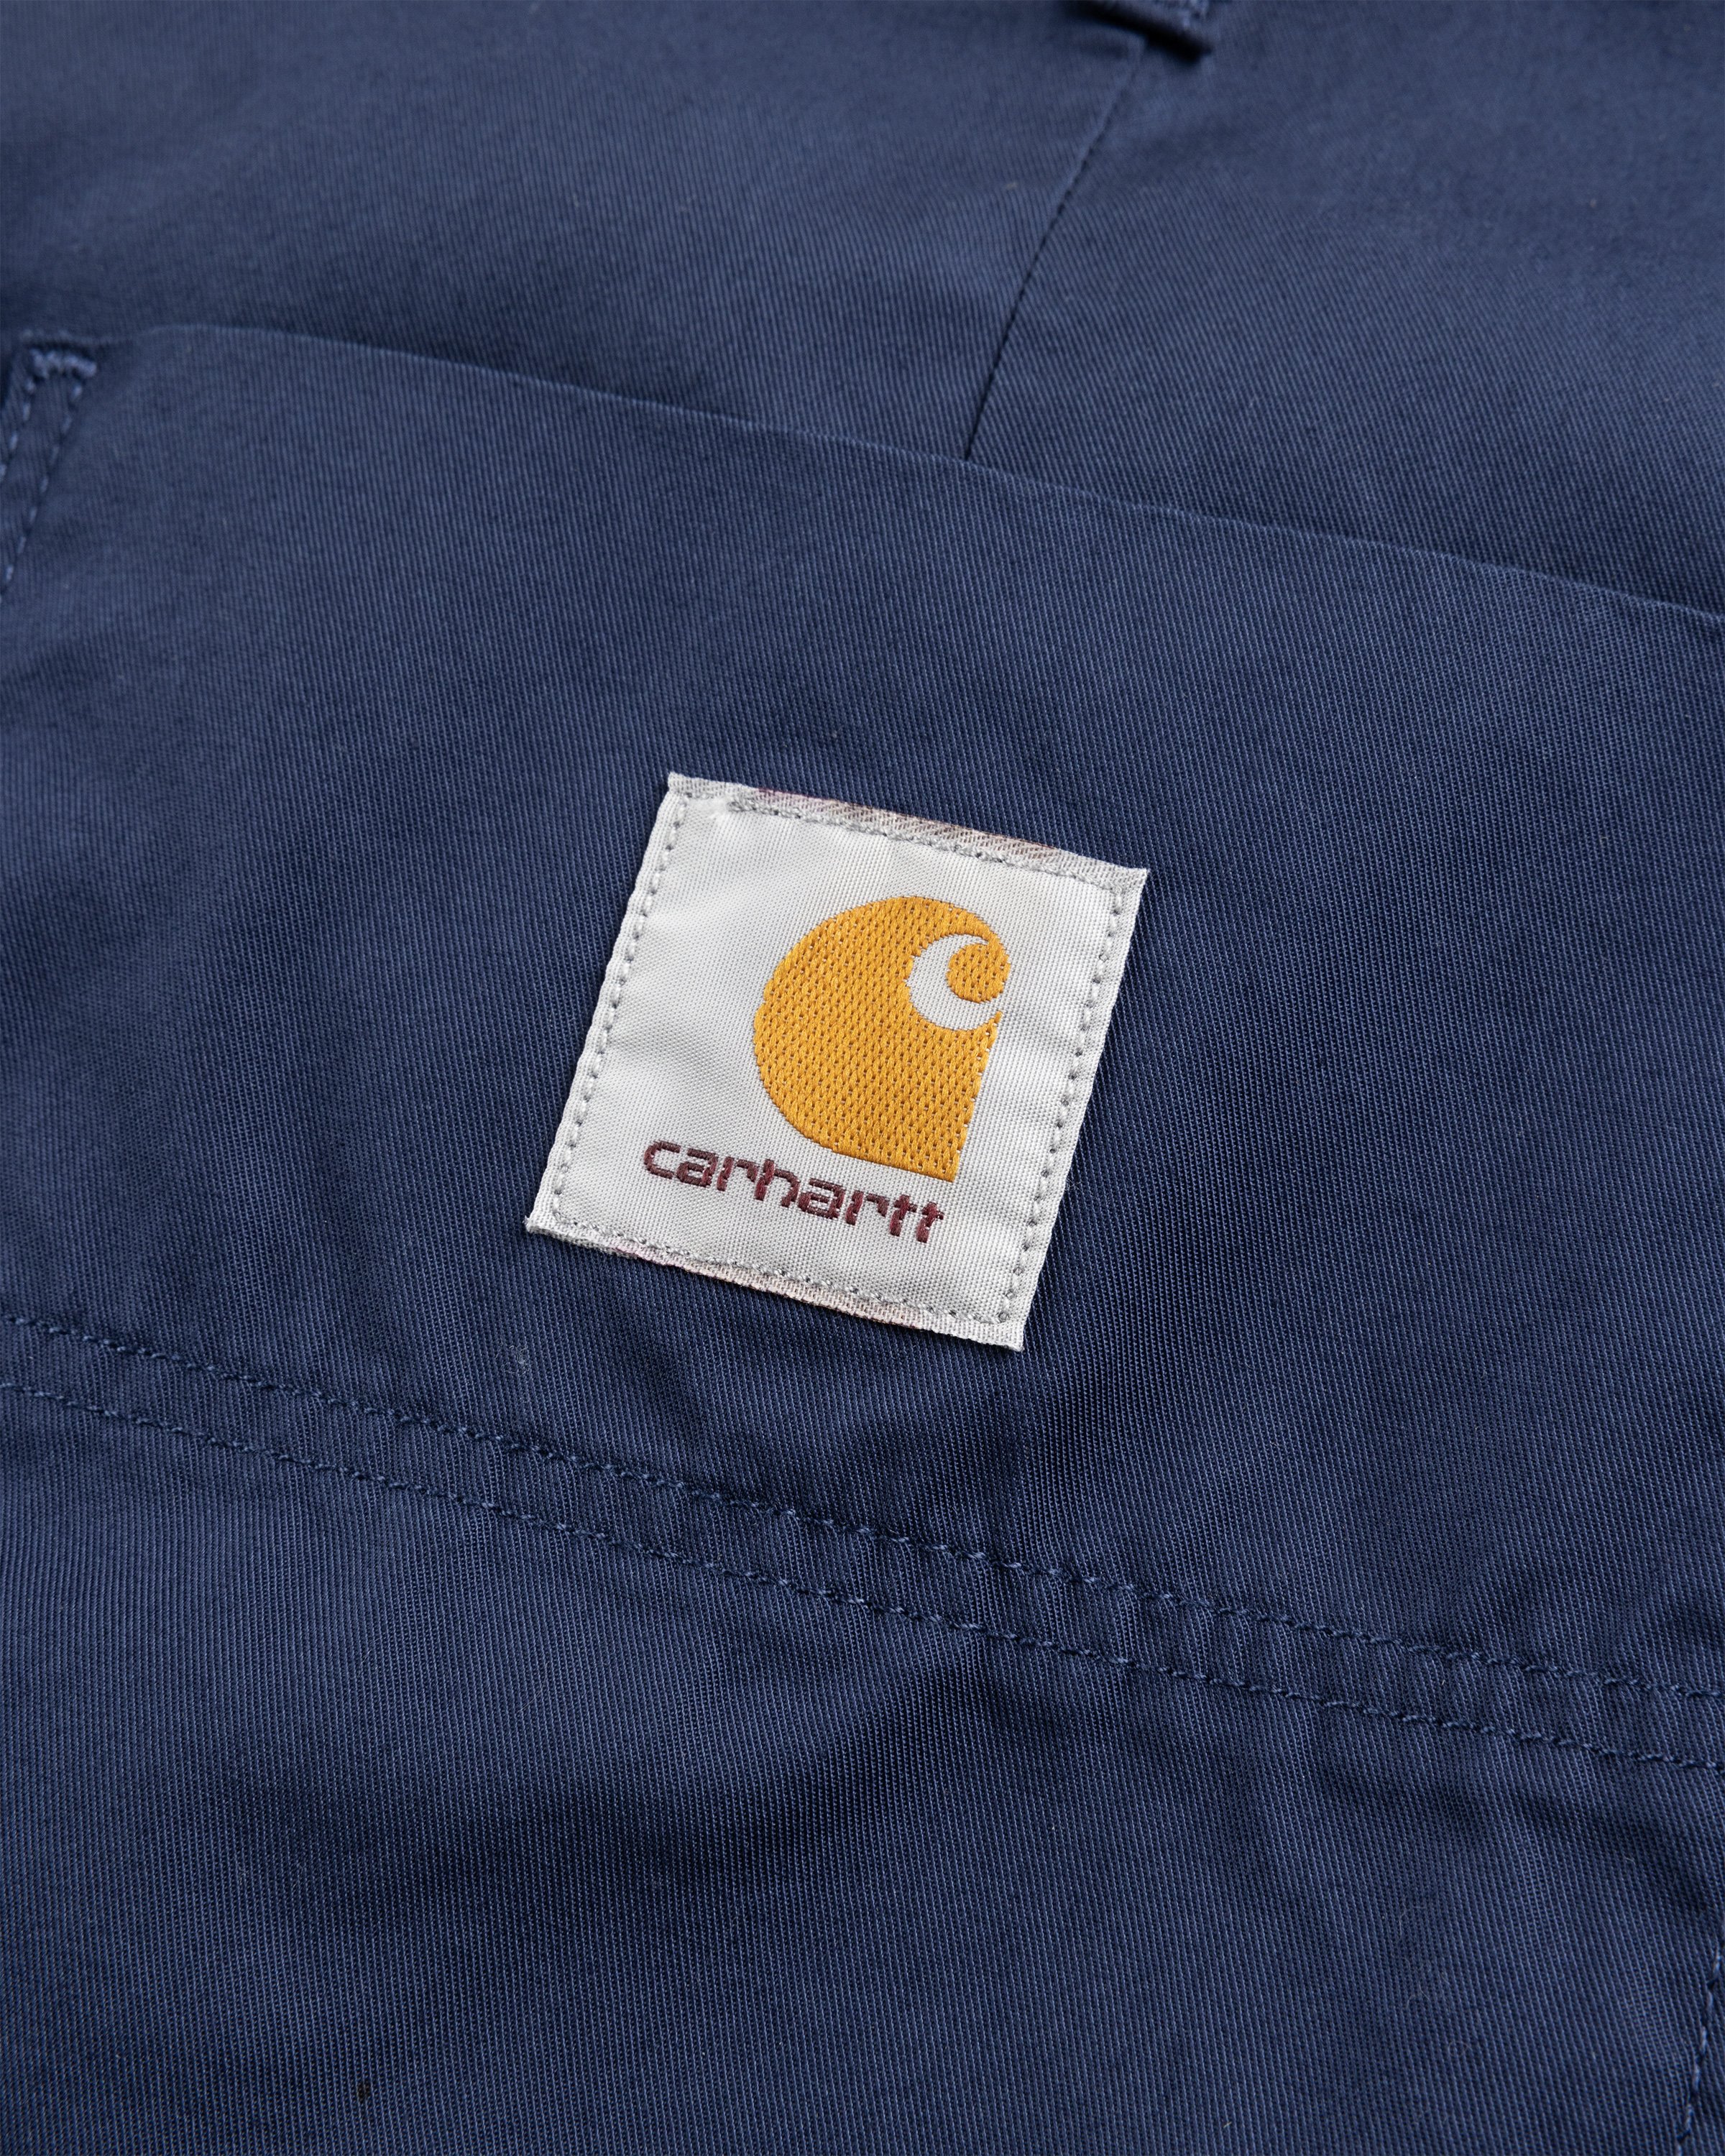 Carhartt WIP - Albert Short Blue /rinsed - Clothing - Blue - Image 6